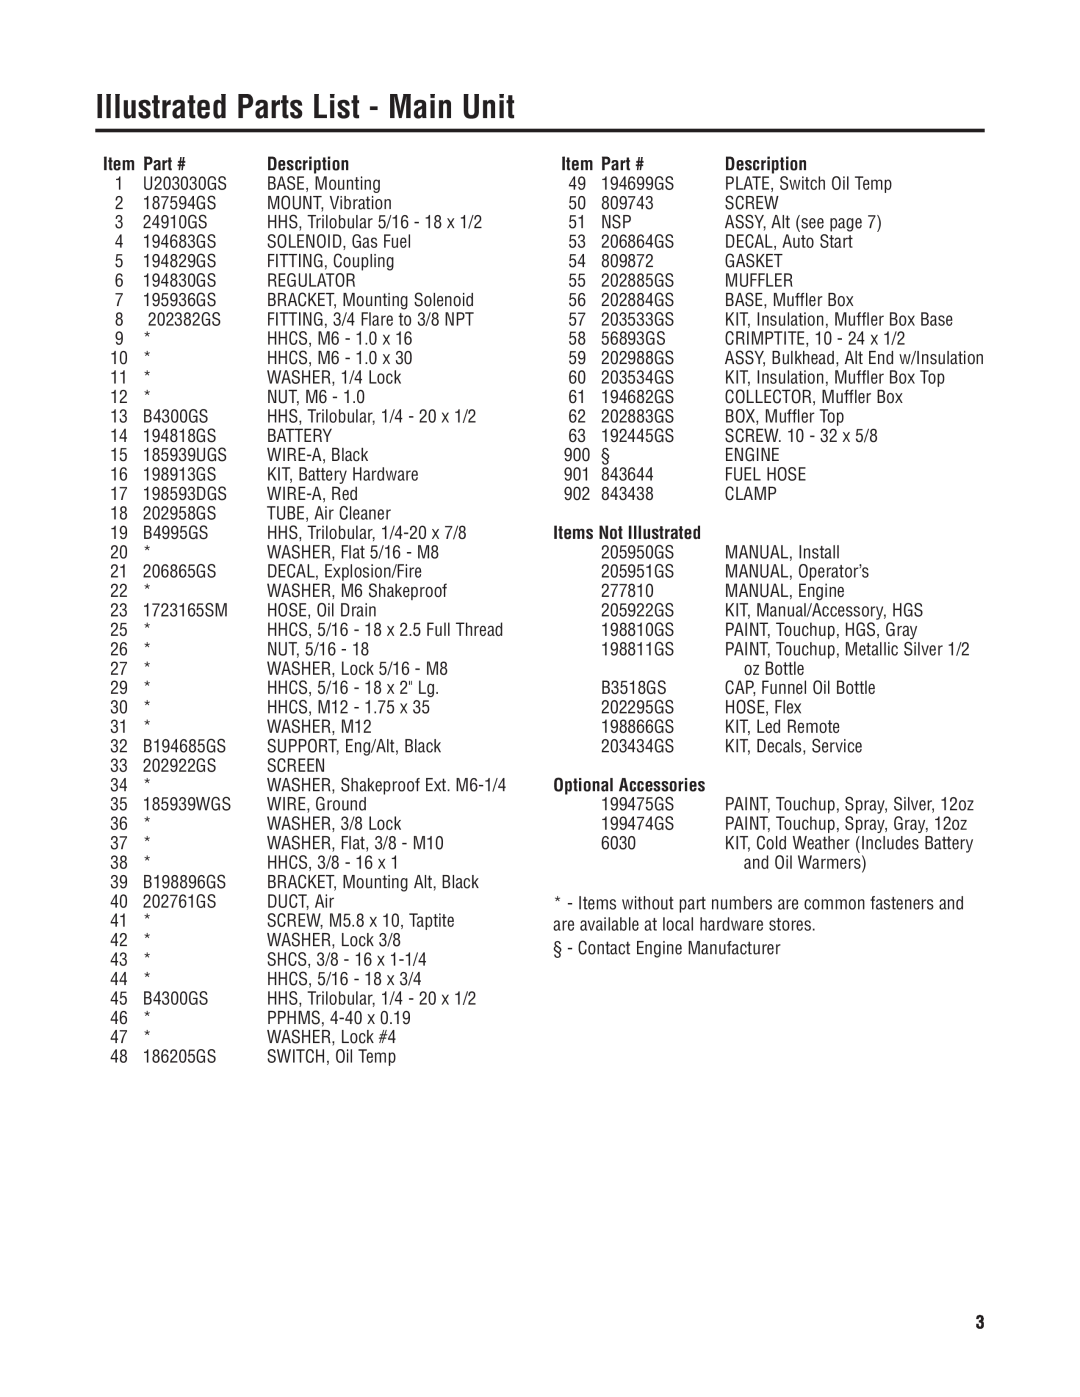 Briggs & Stratton 40297 manual Illustrated Parts List - Main Unit, Description, Items Not Illustrated 